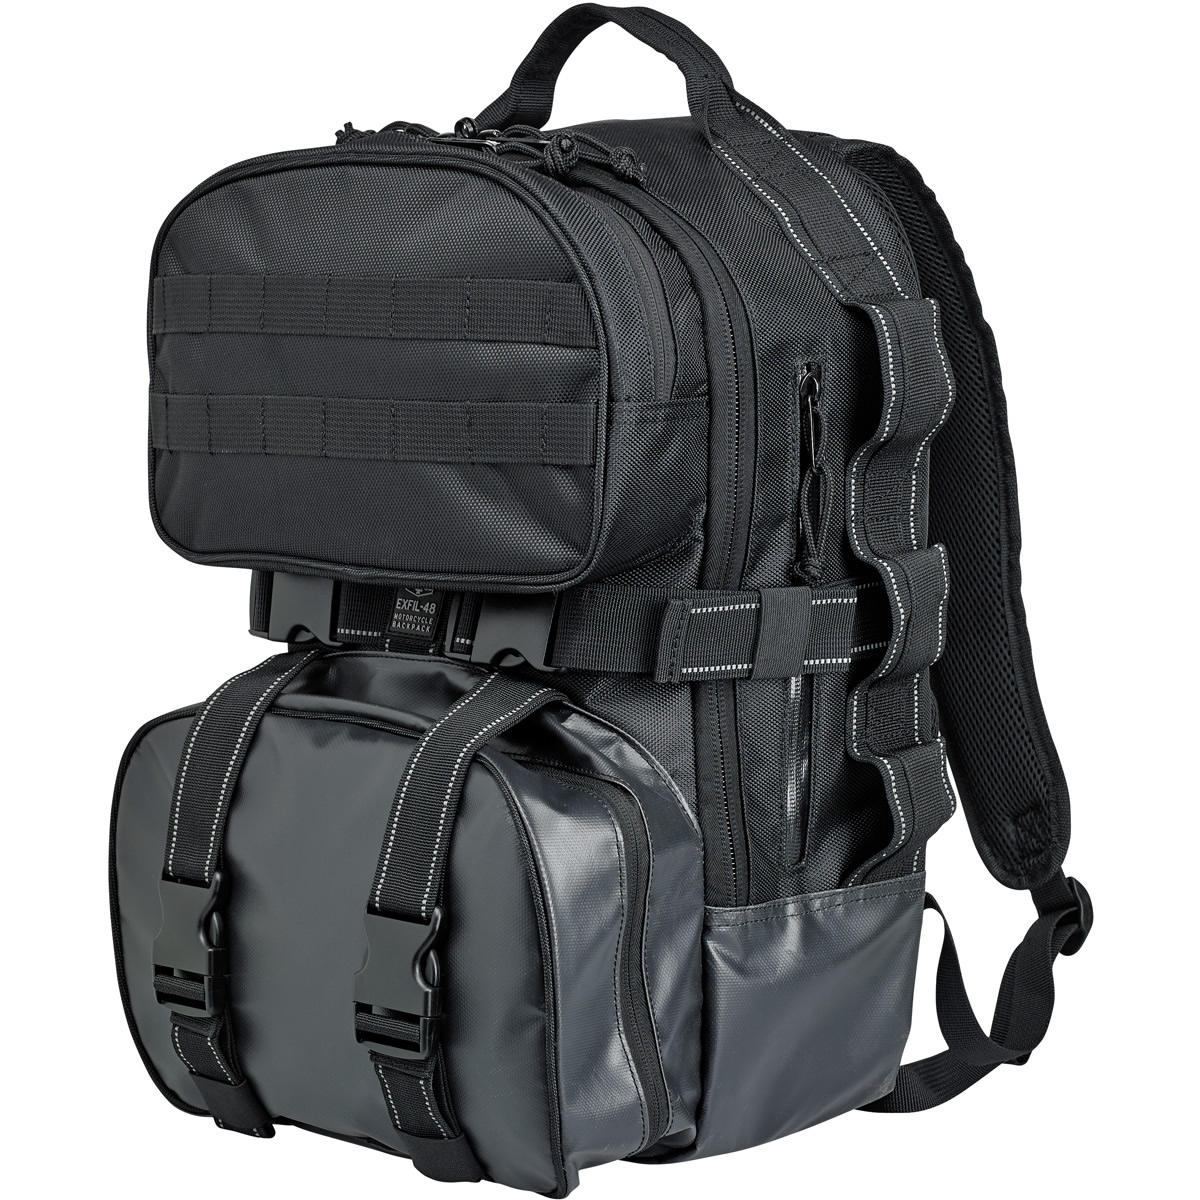 Biltwell Backpack Exfil-48 Black